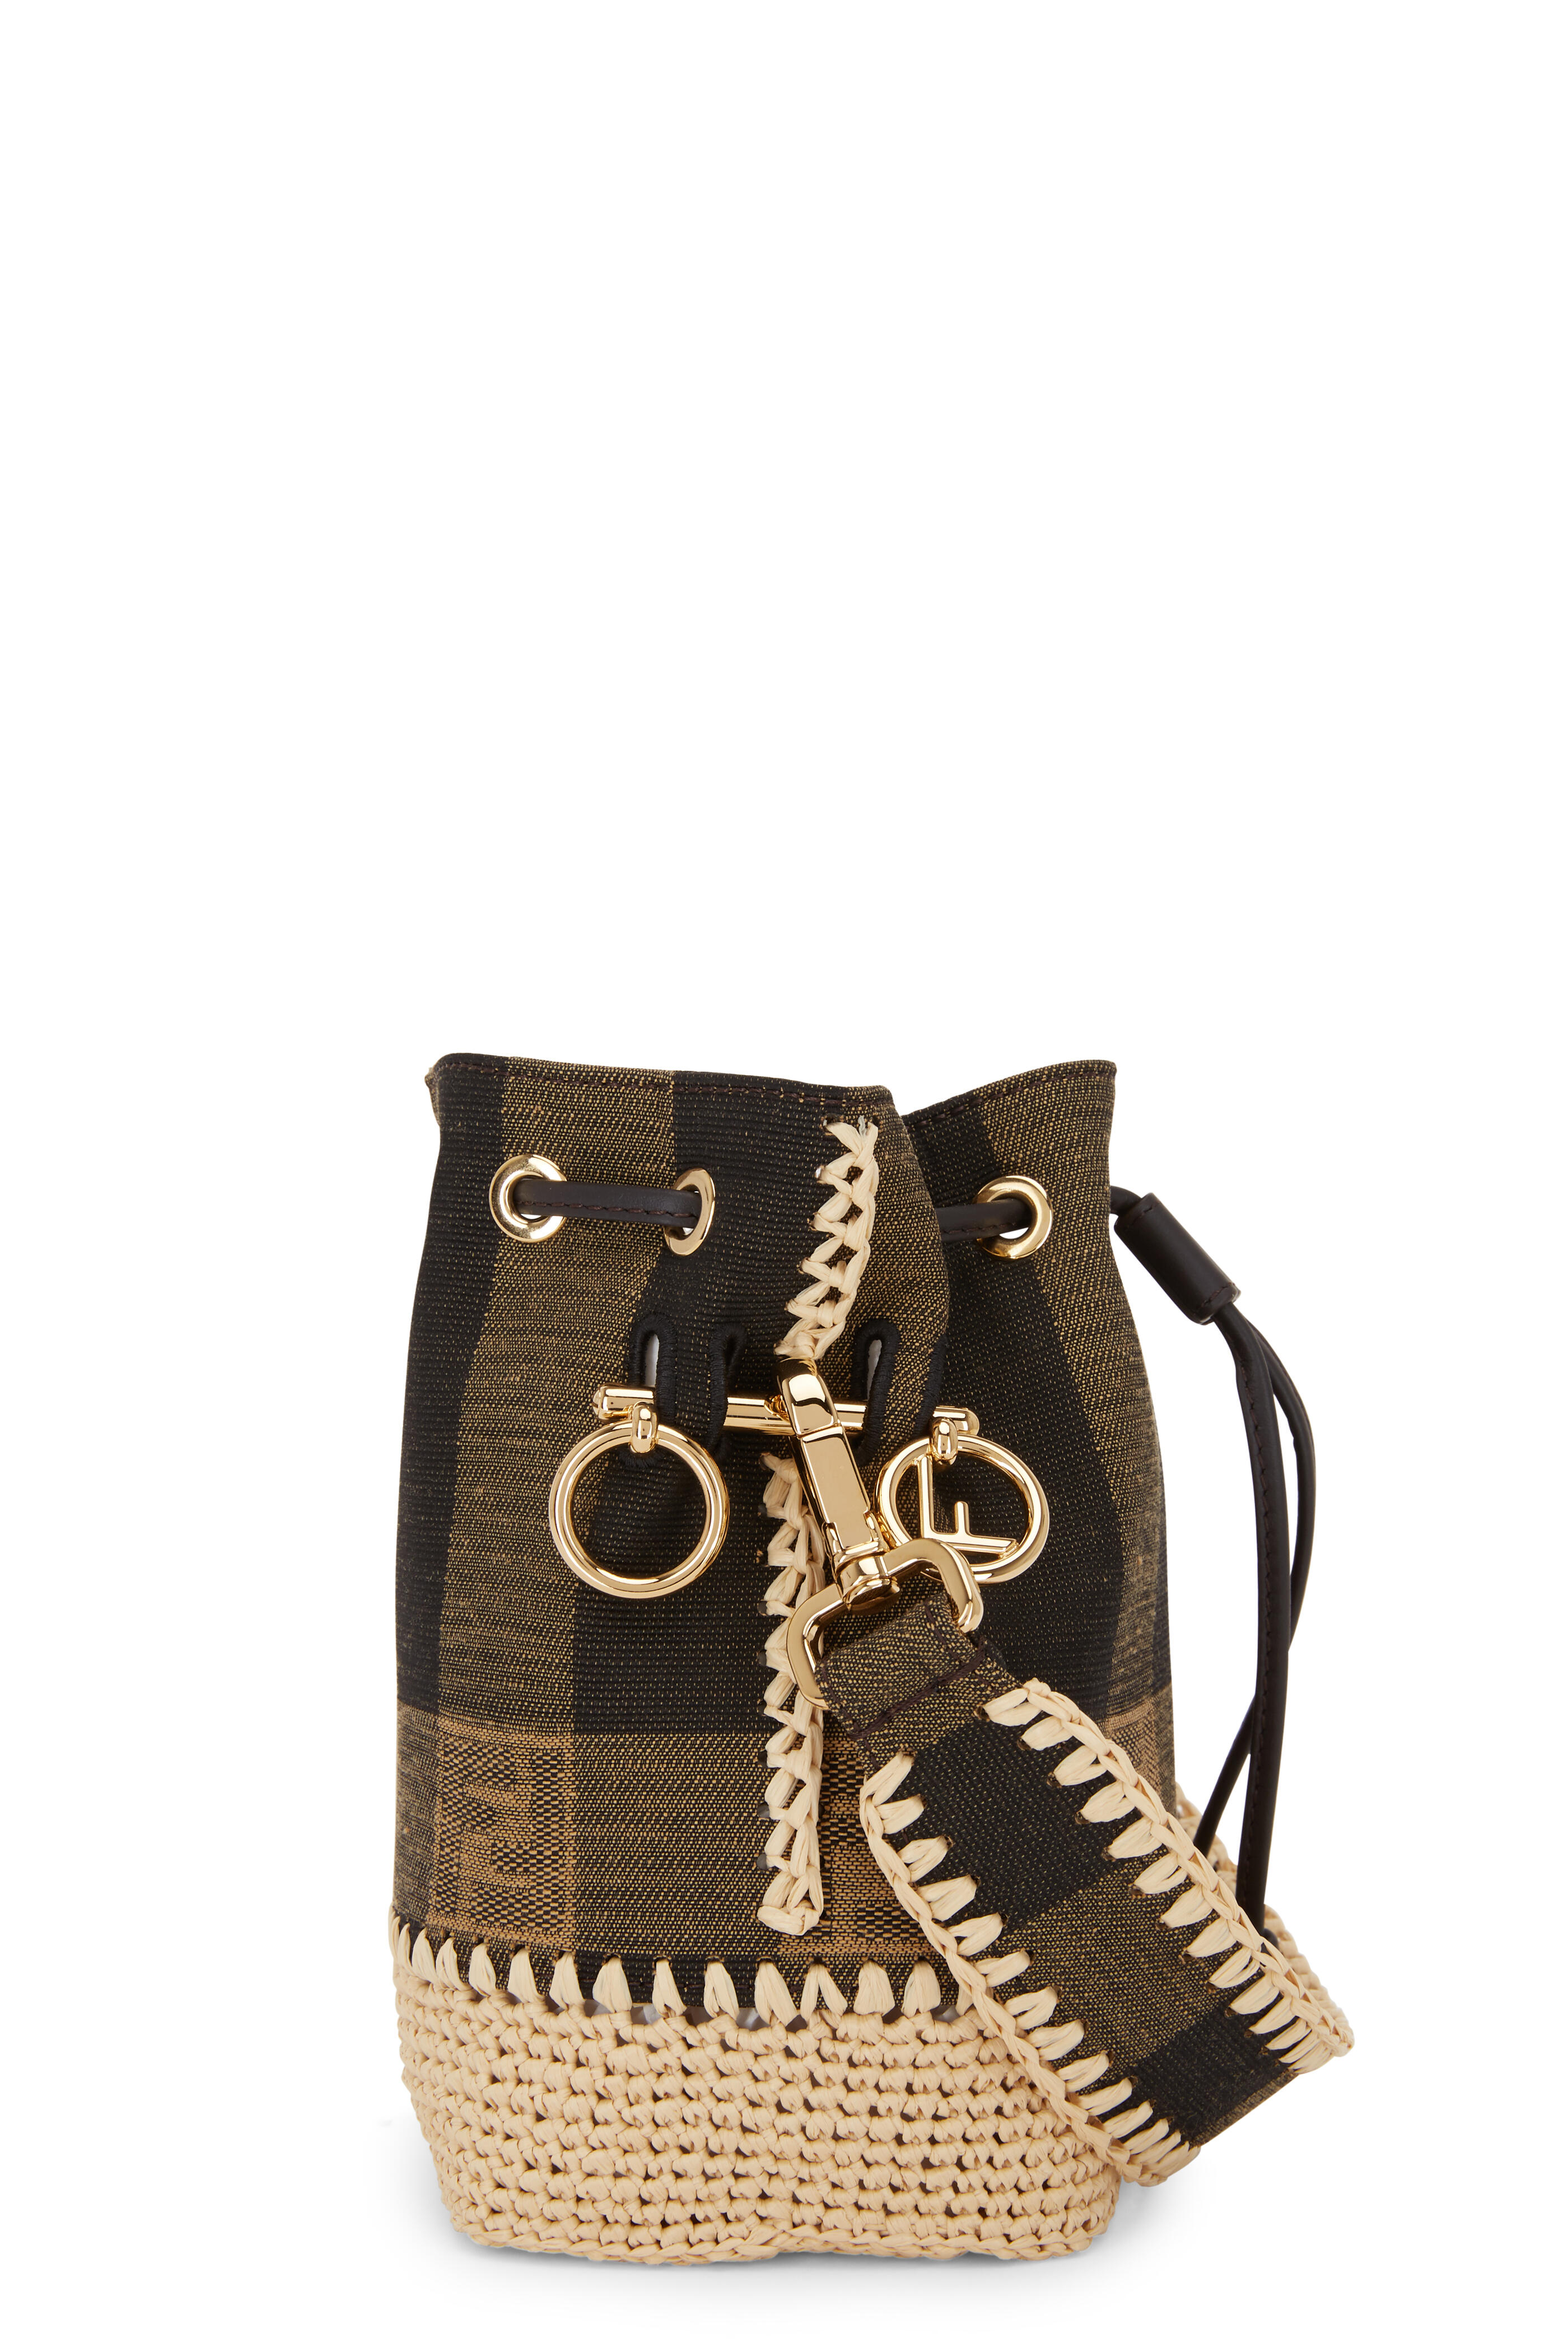 Fendi Mon Tresor Mini Canvas & Leather Bucket Bag in Brown